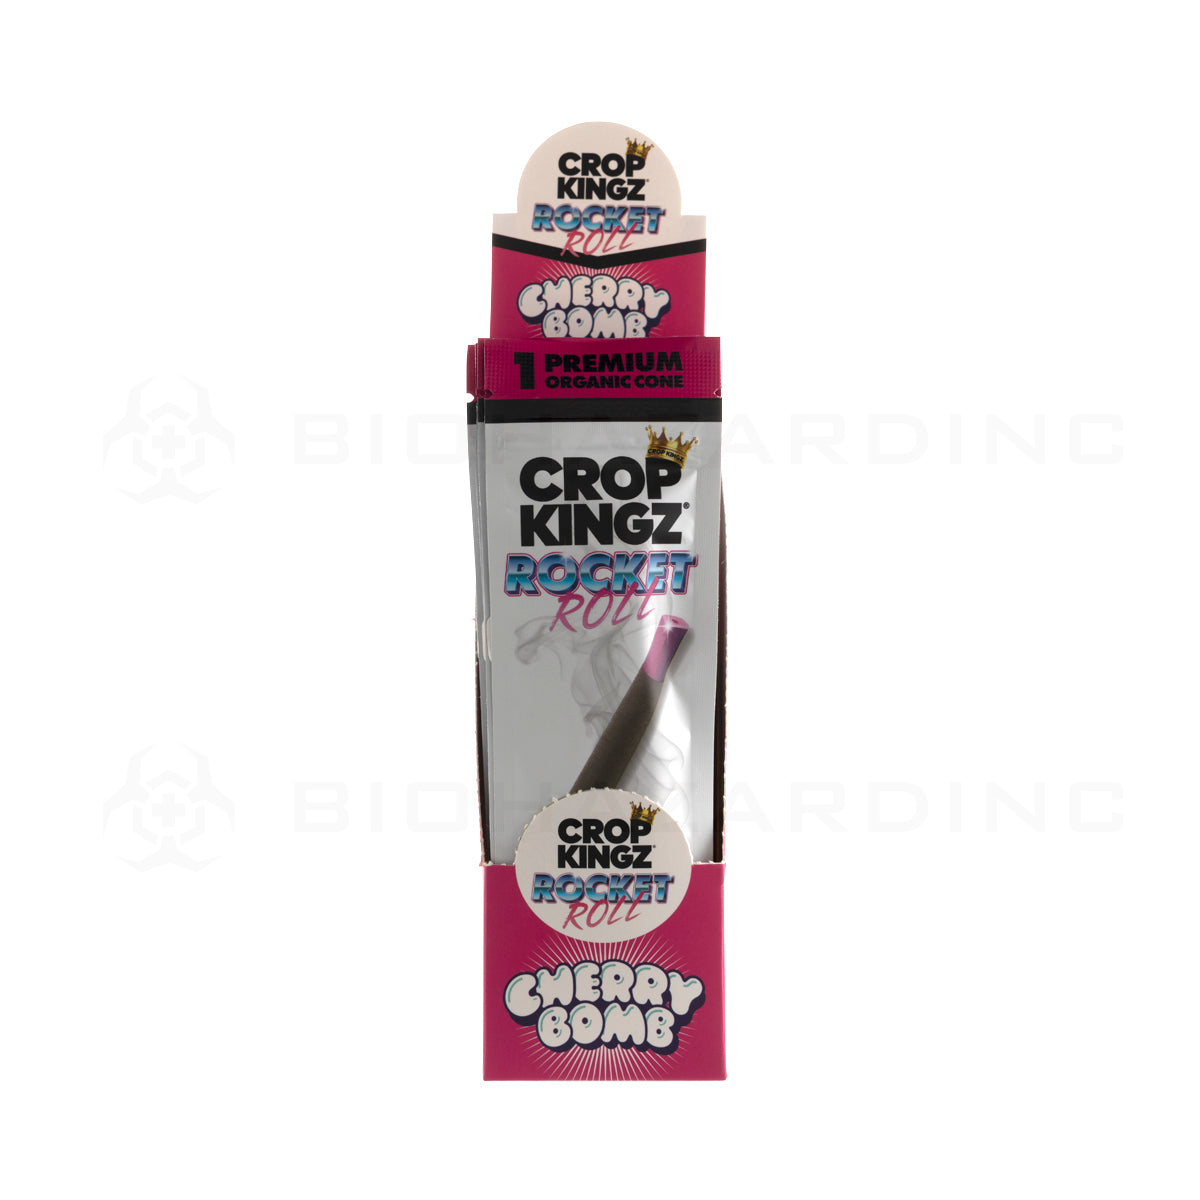 Crop Kingz | Rocket Roll Organic Hemp Wrap | Cherry Bomb - 15 Count Hemp Wraps Crop Kingz   